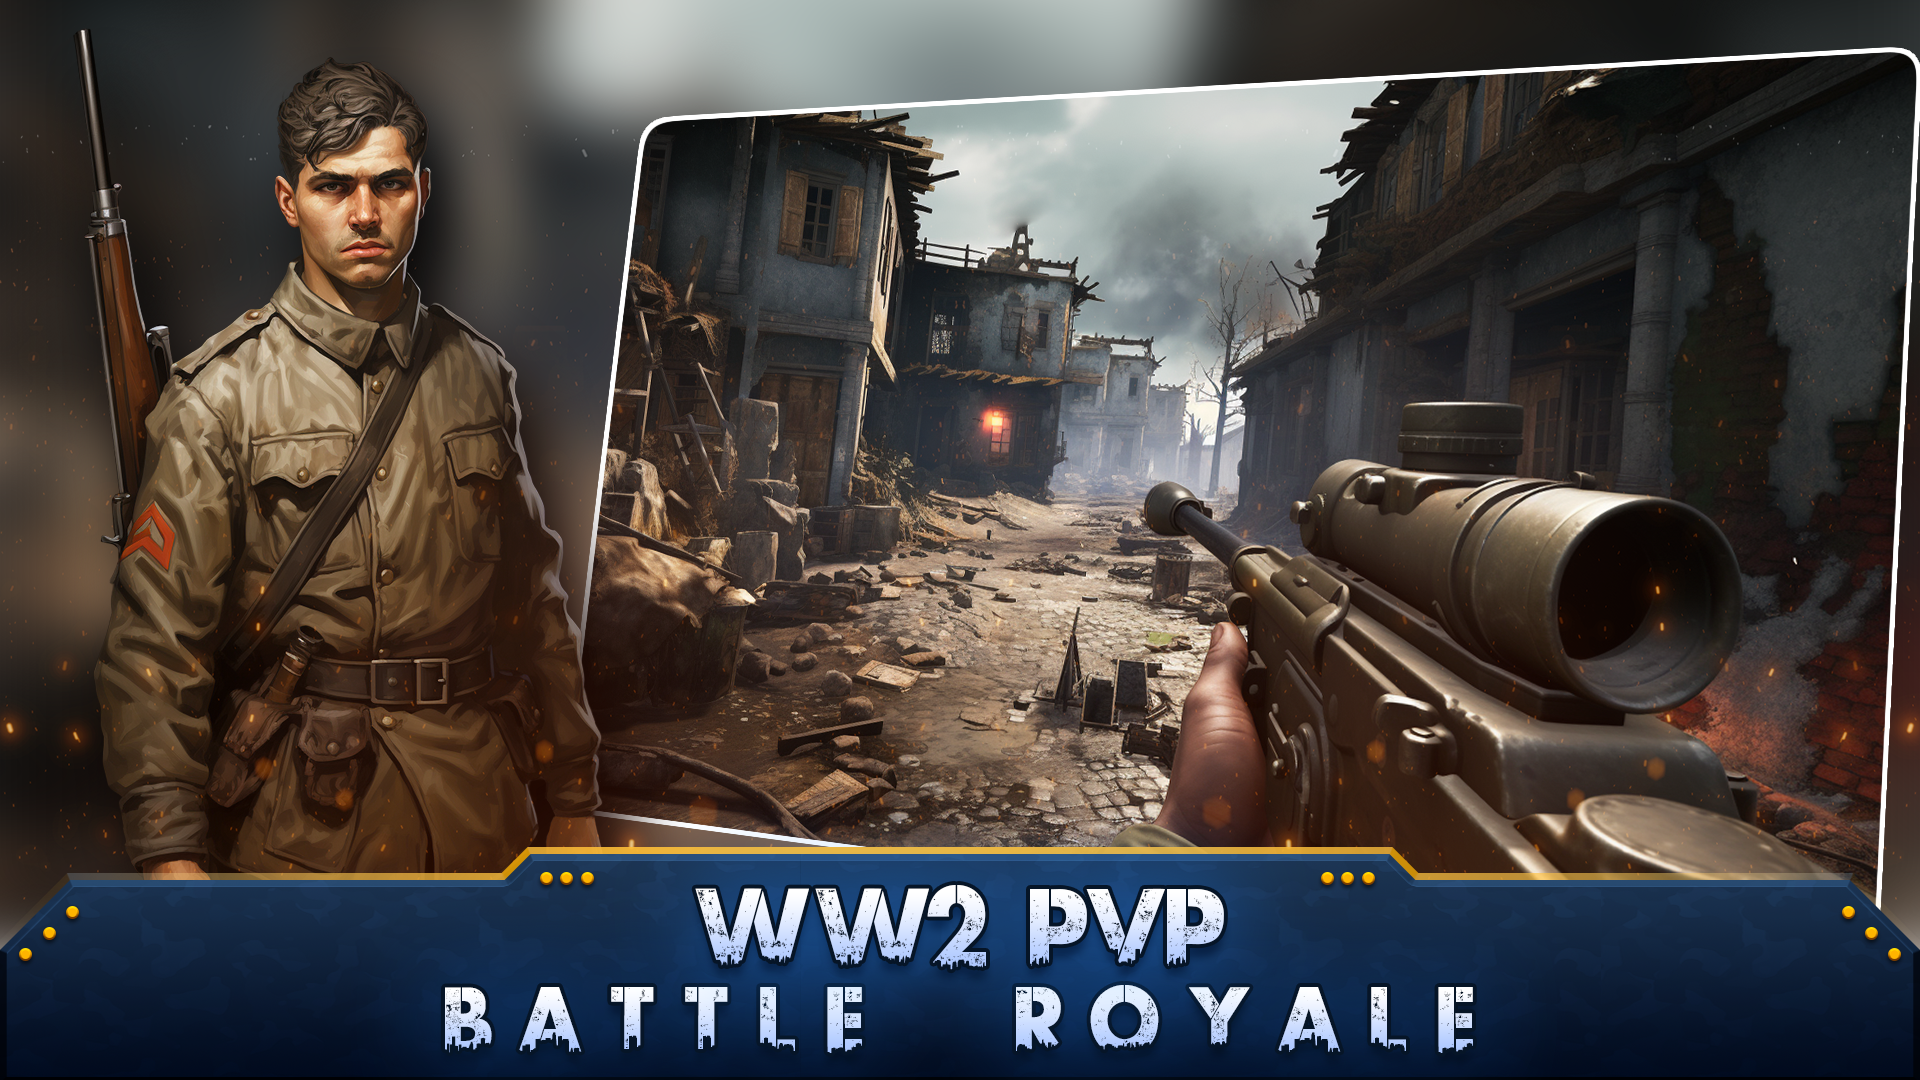 Battlefield 3: Classic shooter gets Battle Royale mode via Mod